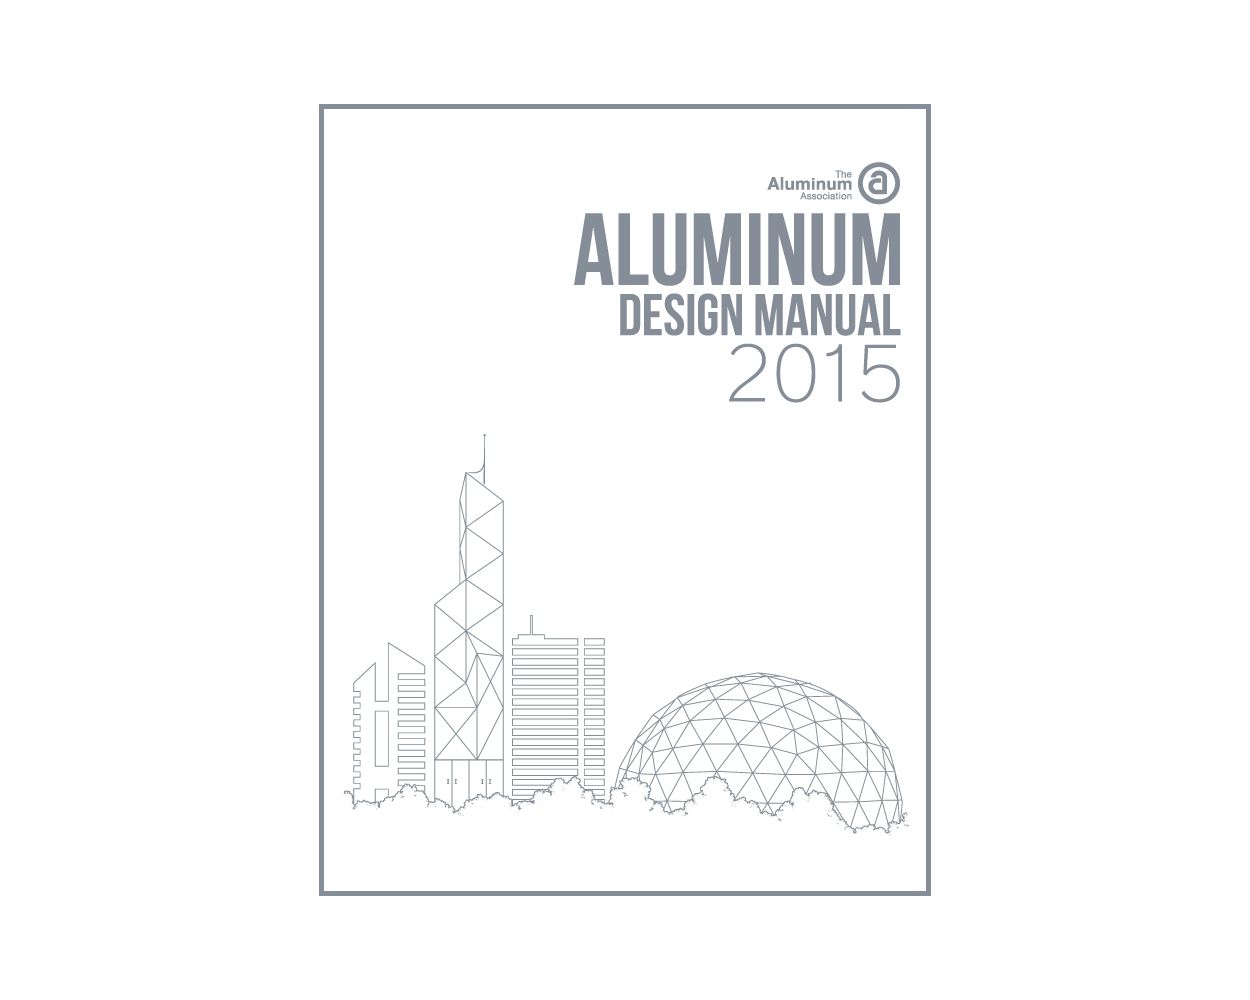 aluminum design manual 2015 pdf download